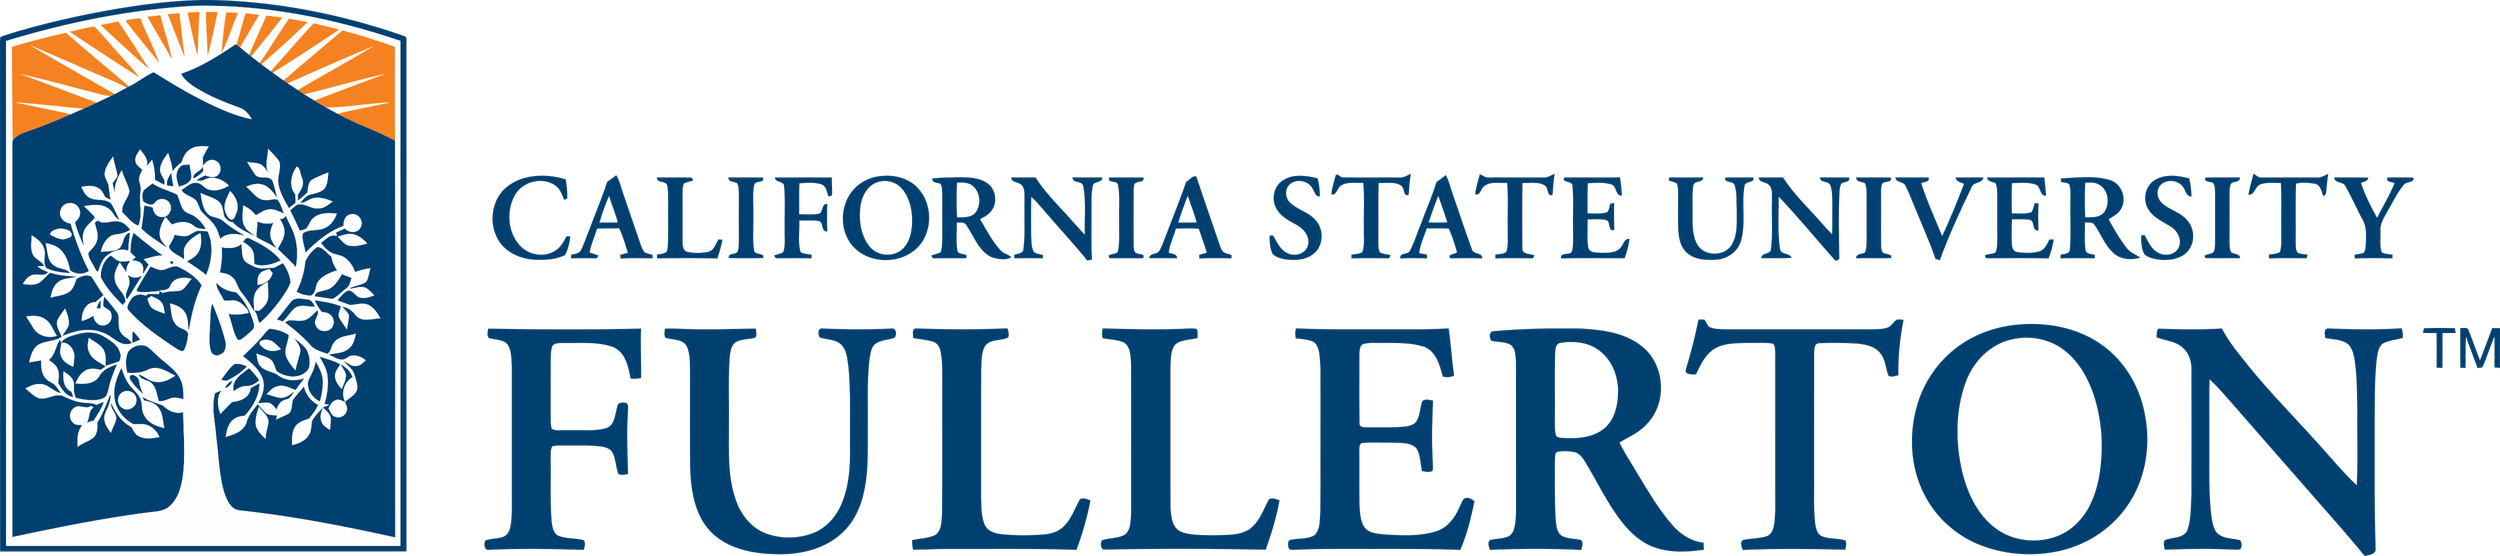 California_State_University_Fullerton_Logo_full.png